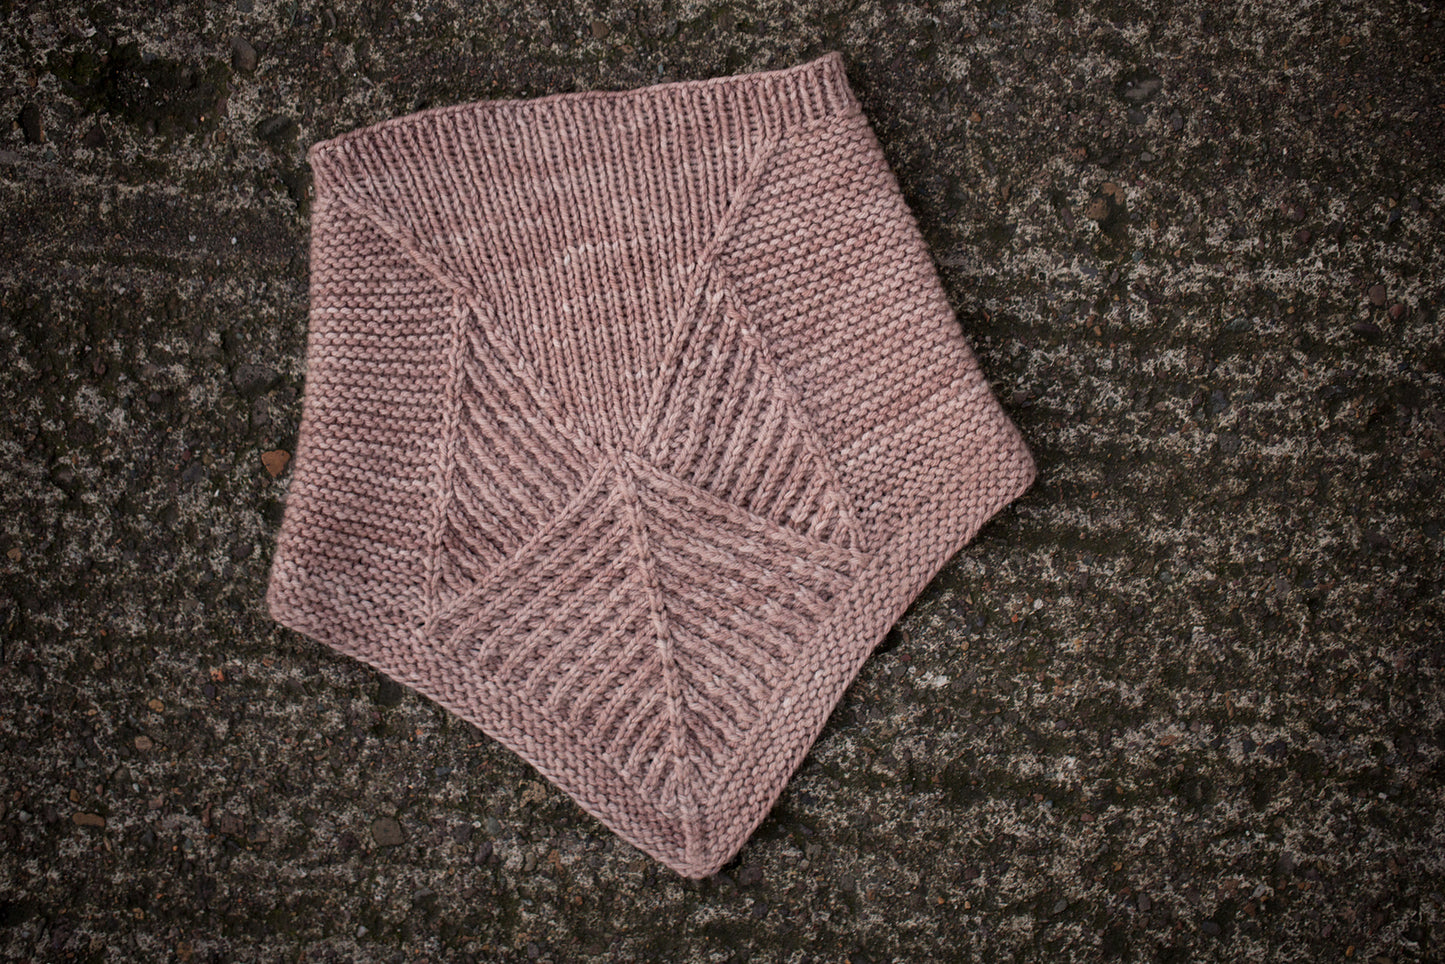 Dragoste collar knitting pattern by Ysolda Teague